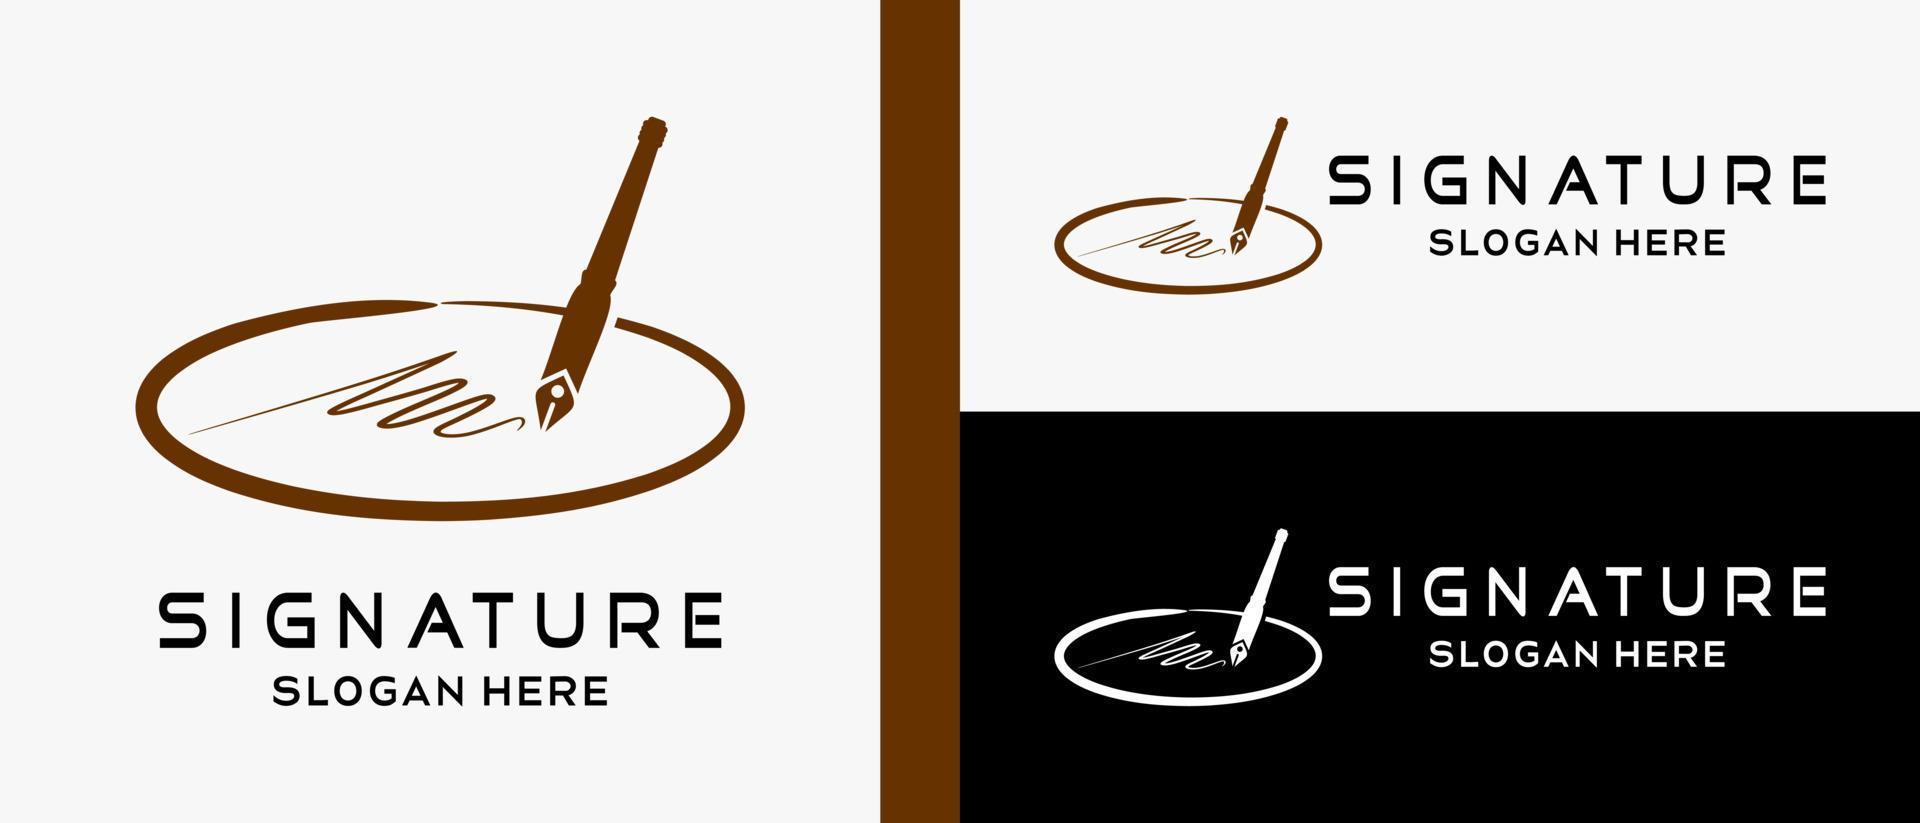 signature logo design template with dip in creative and simple concept. premium vector logo illustration